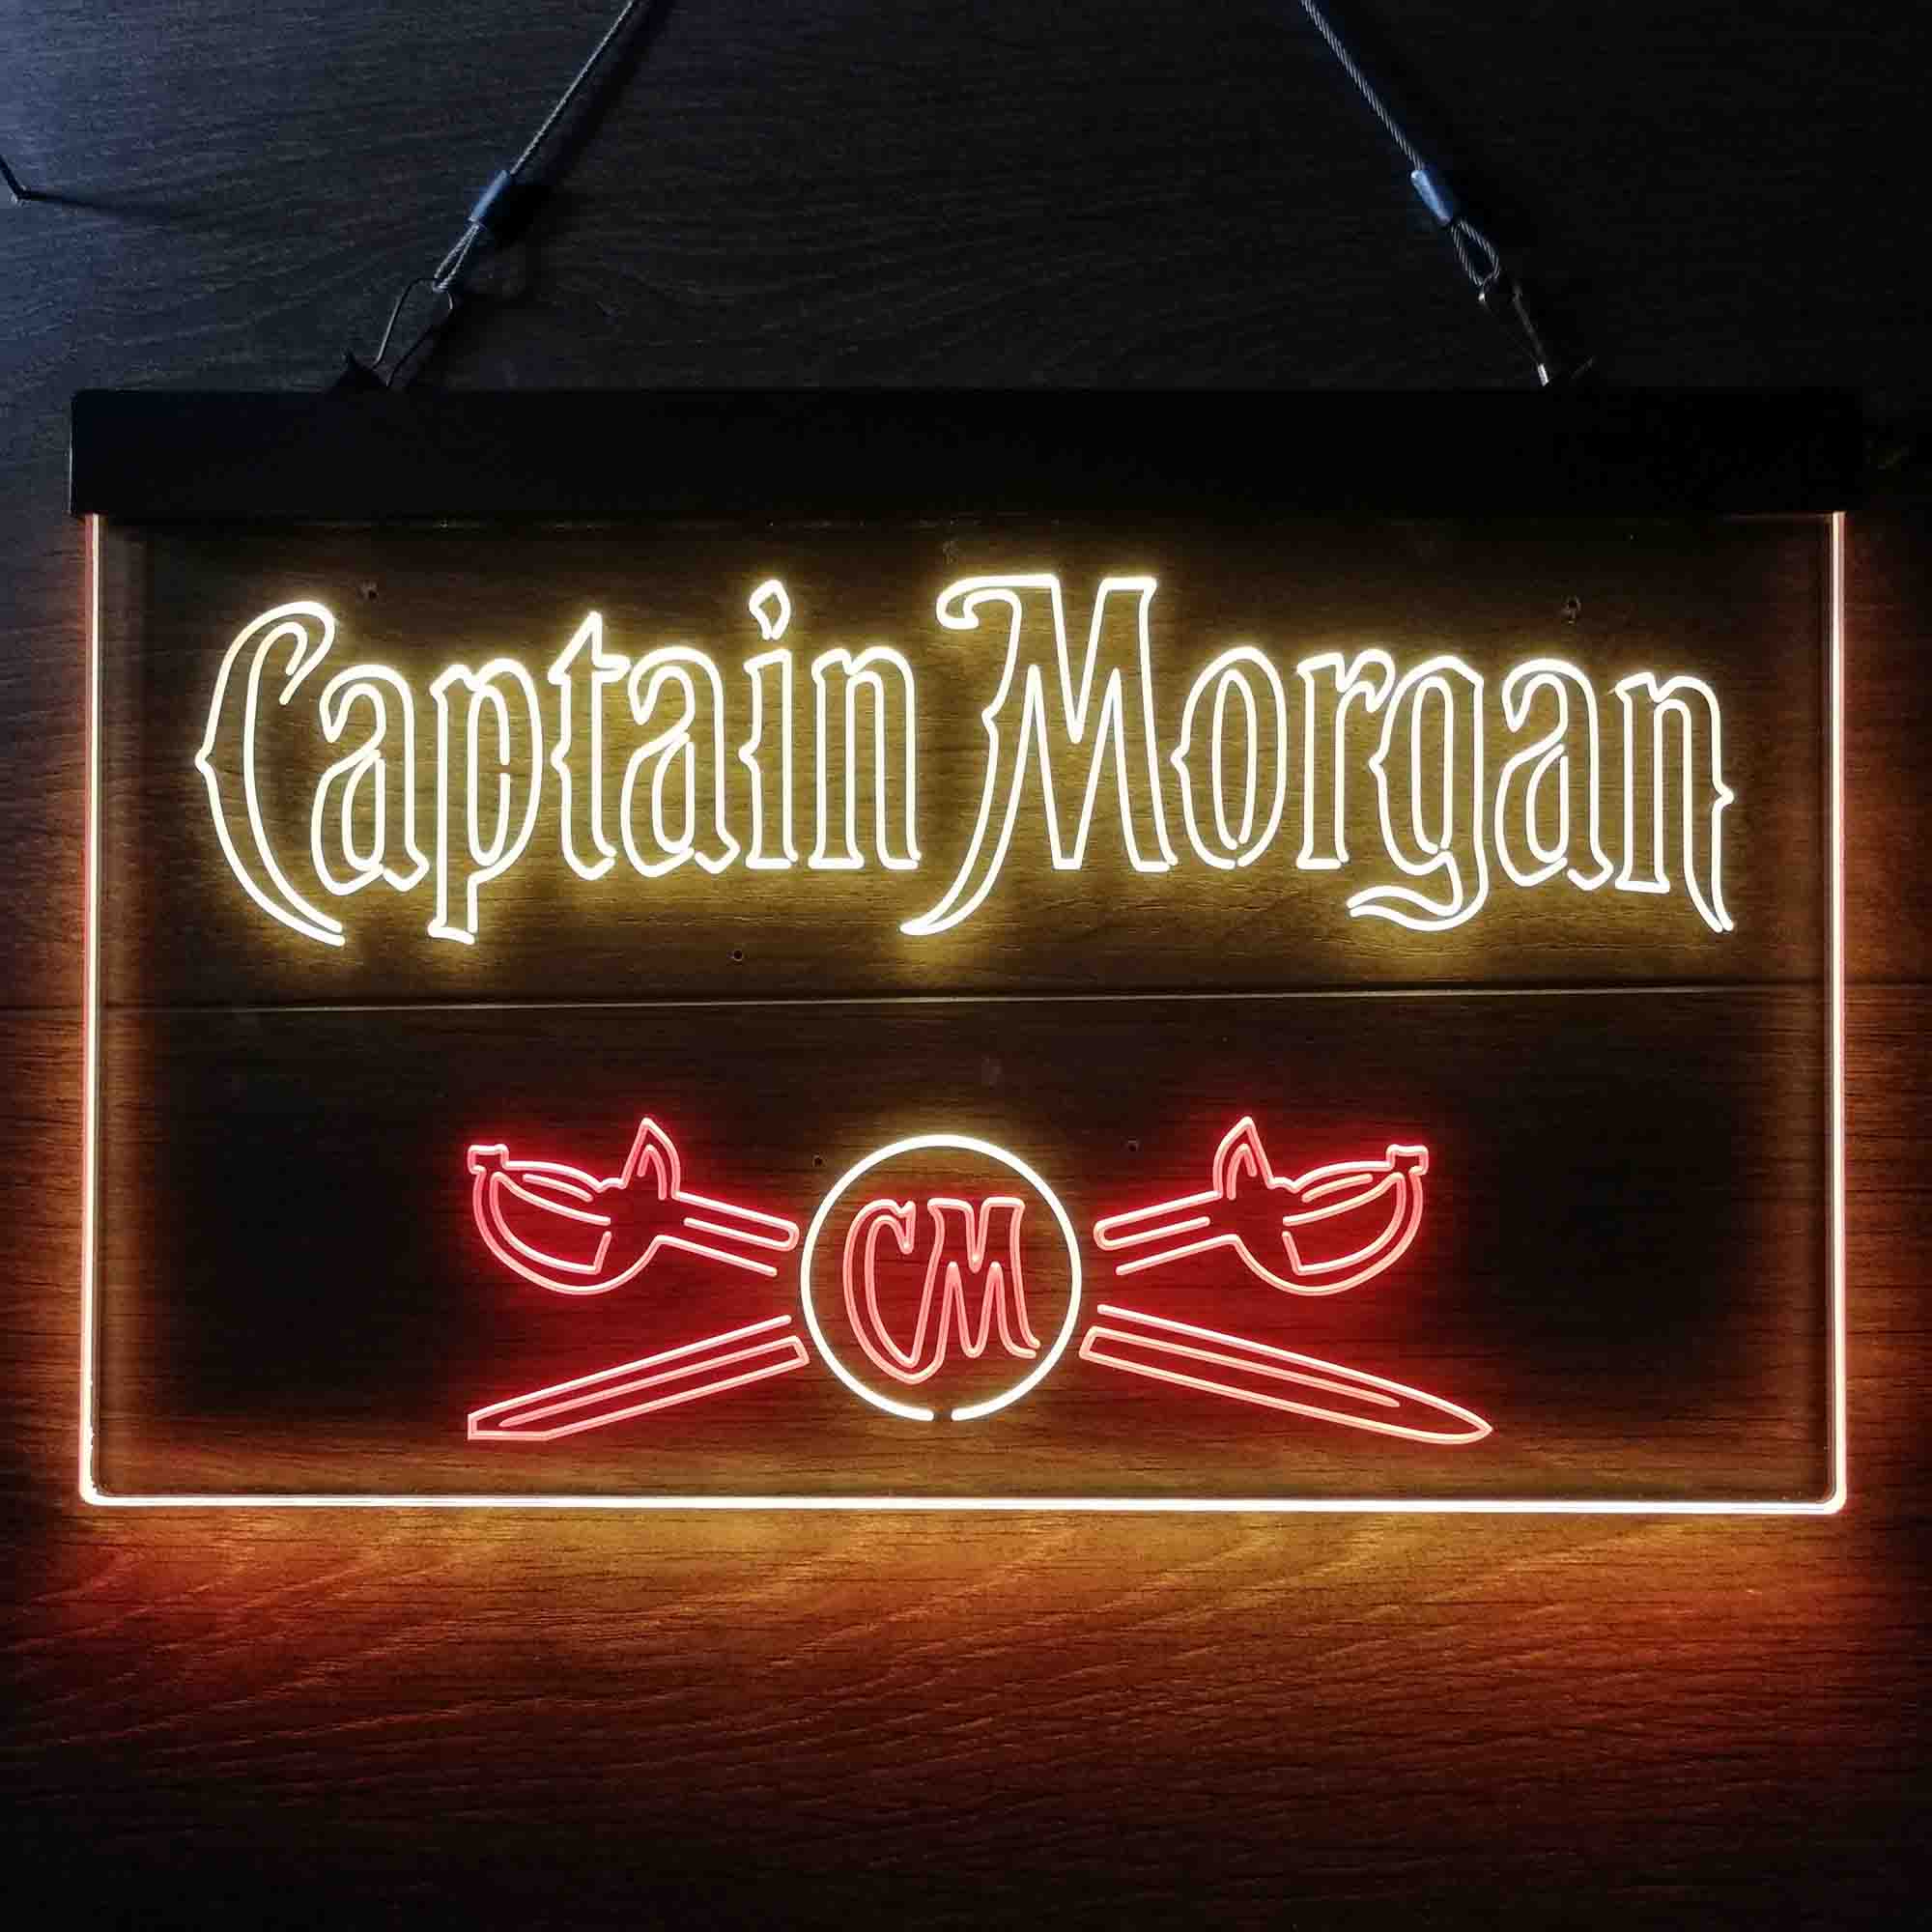 CM Captain Morgan LED Neon Sign